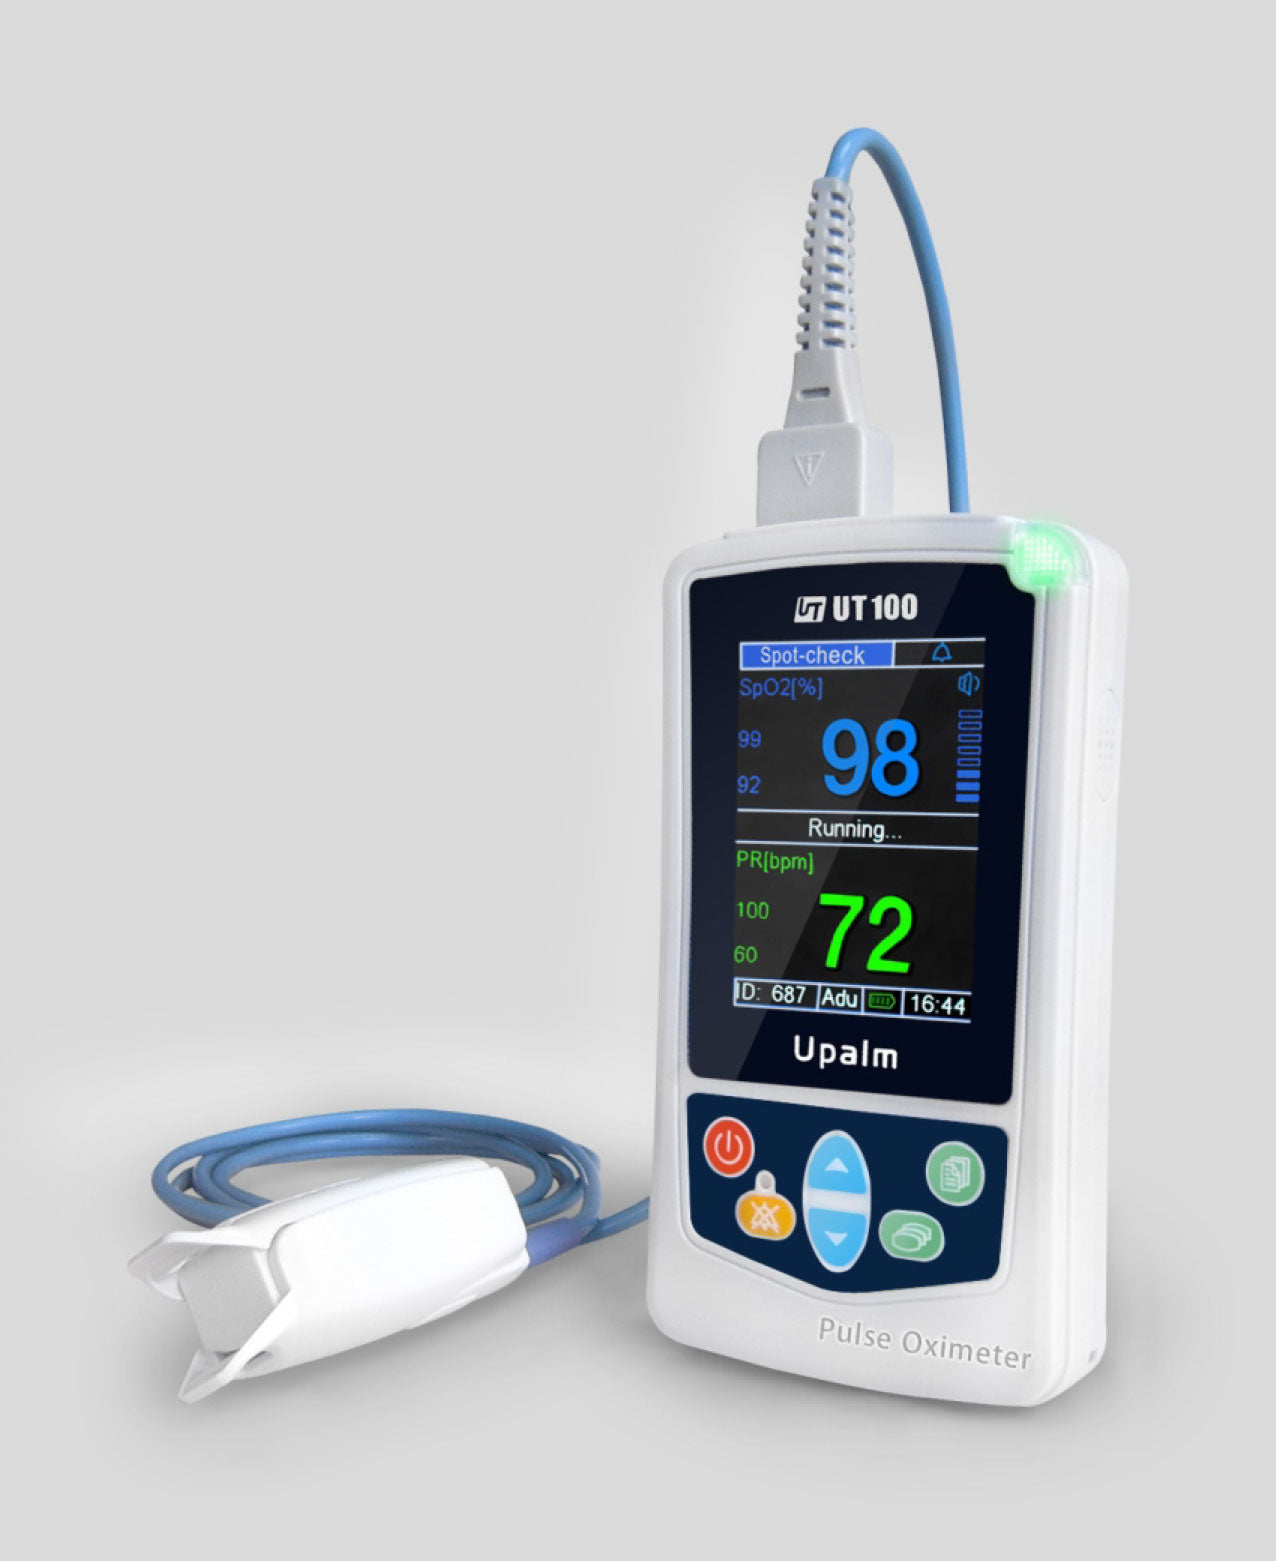 UT100 SpO2 HandHeld Pulse Oximeter Hospital Grade Monitor inCAV Medical And Laboratory Equipment